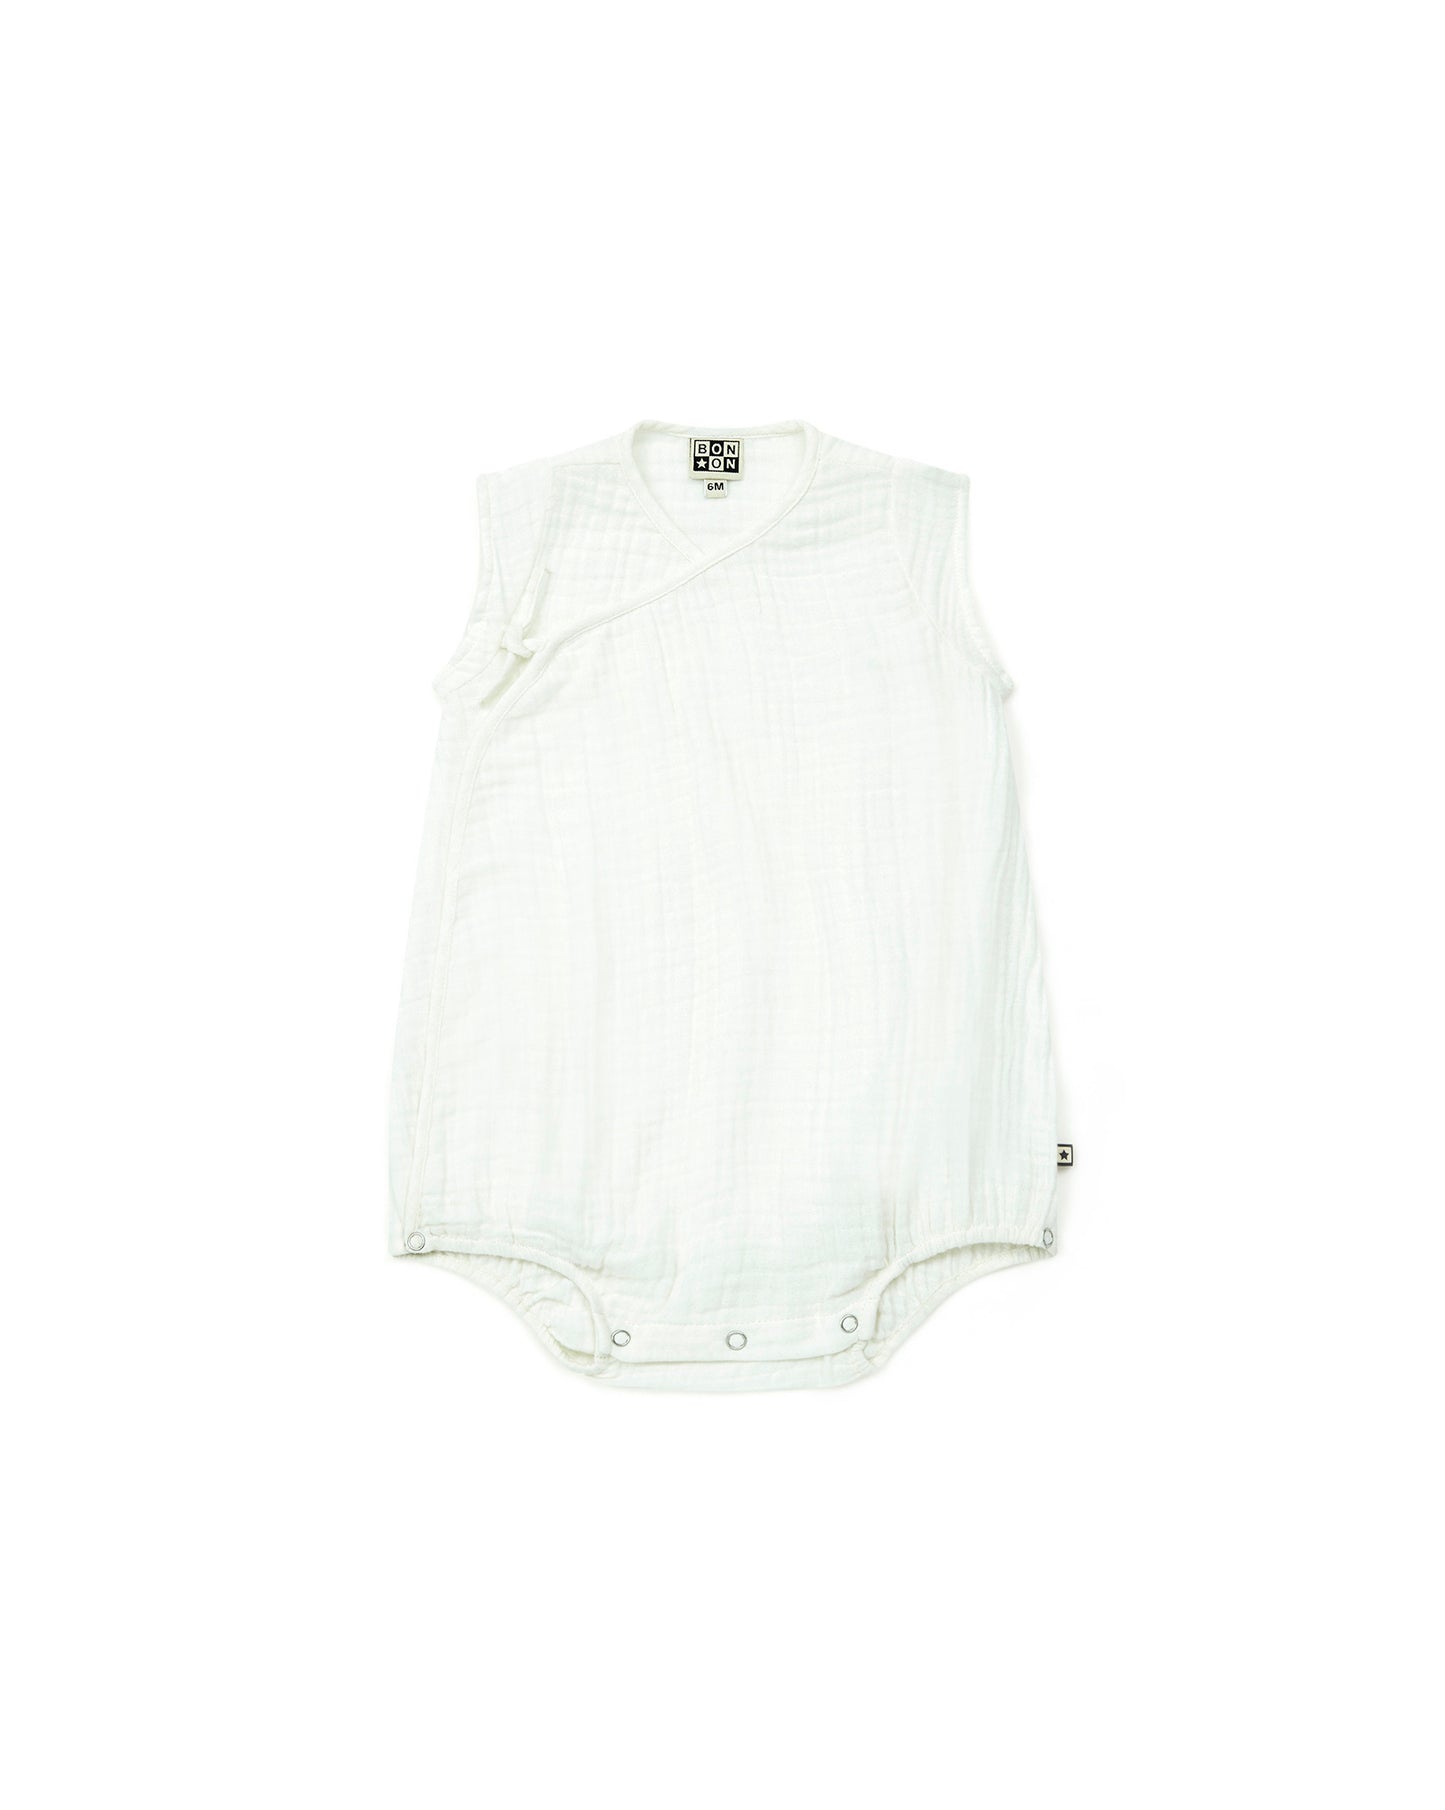 Jumpsuit - Igloo Beige Baby In double gauze 100% organic cotton certified GOTS